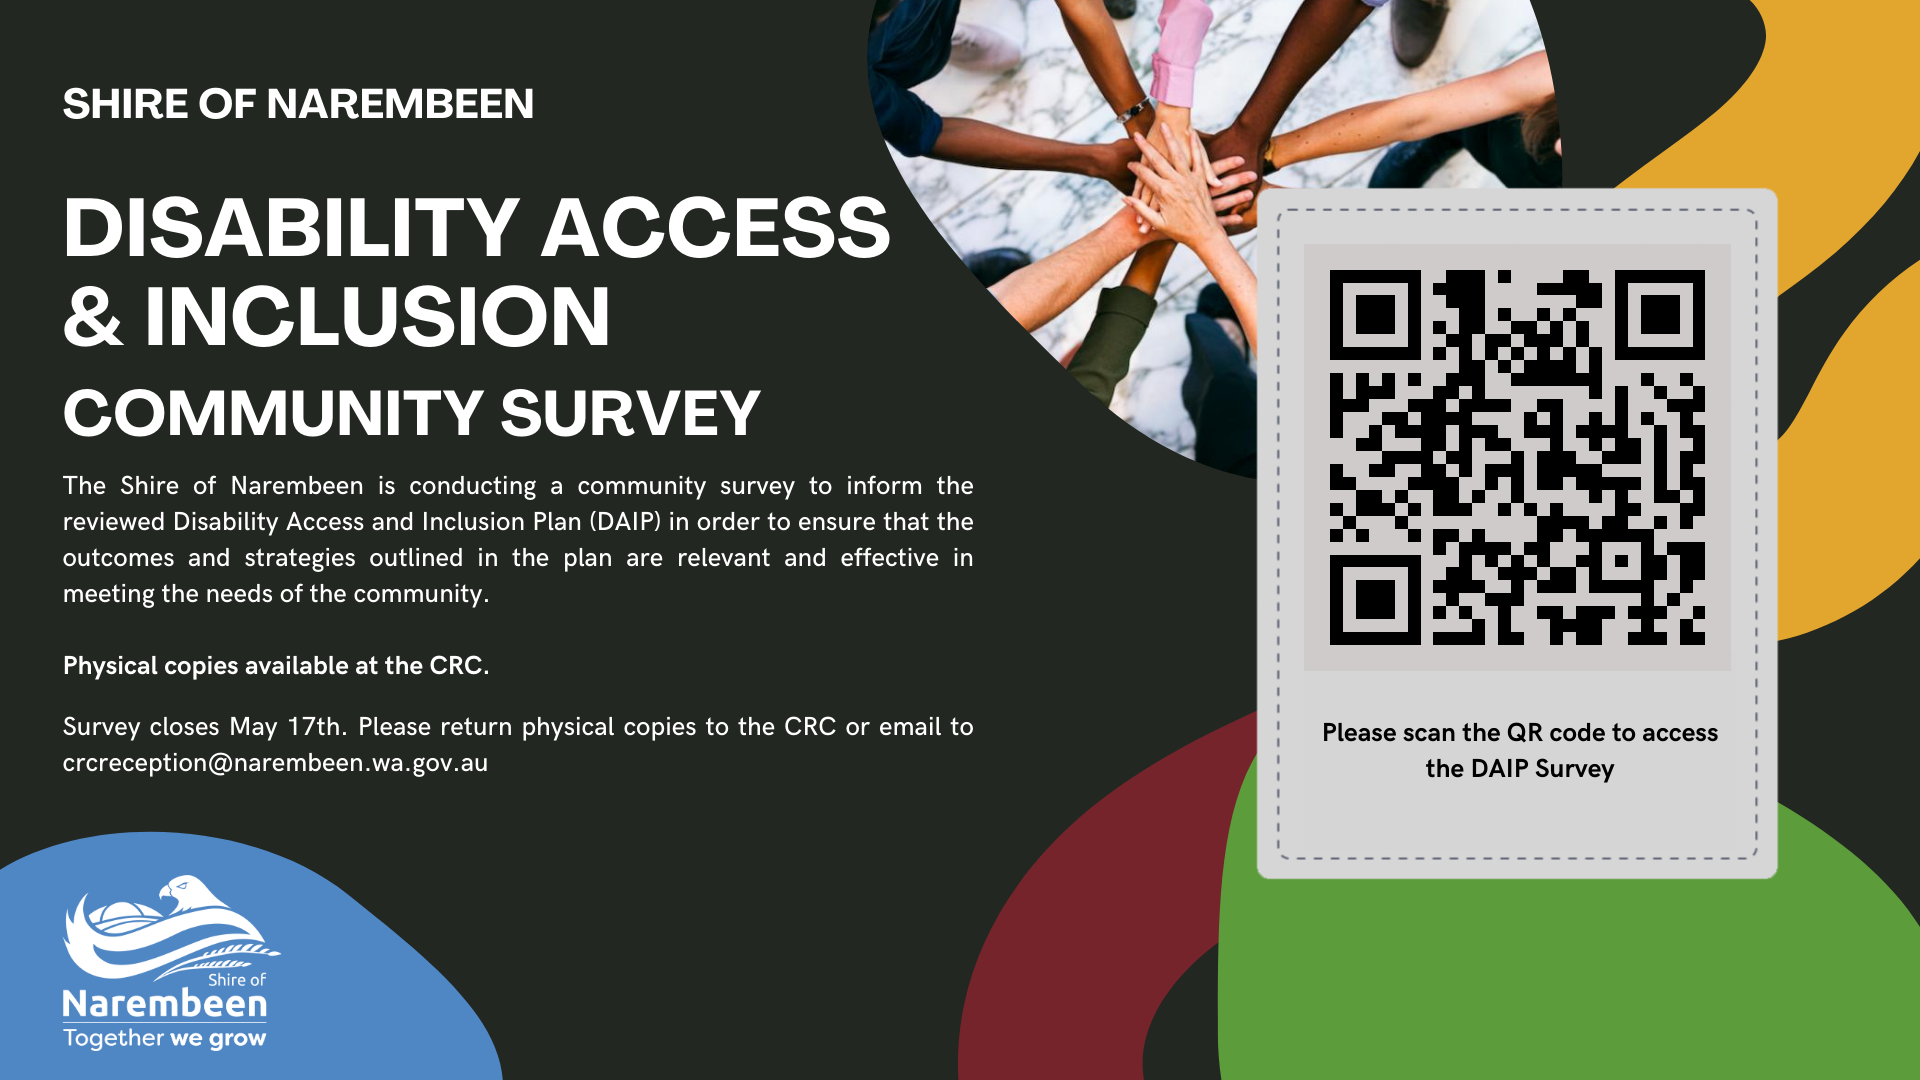 Disability Access & Inclusion - Community Survey